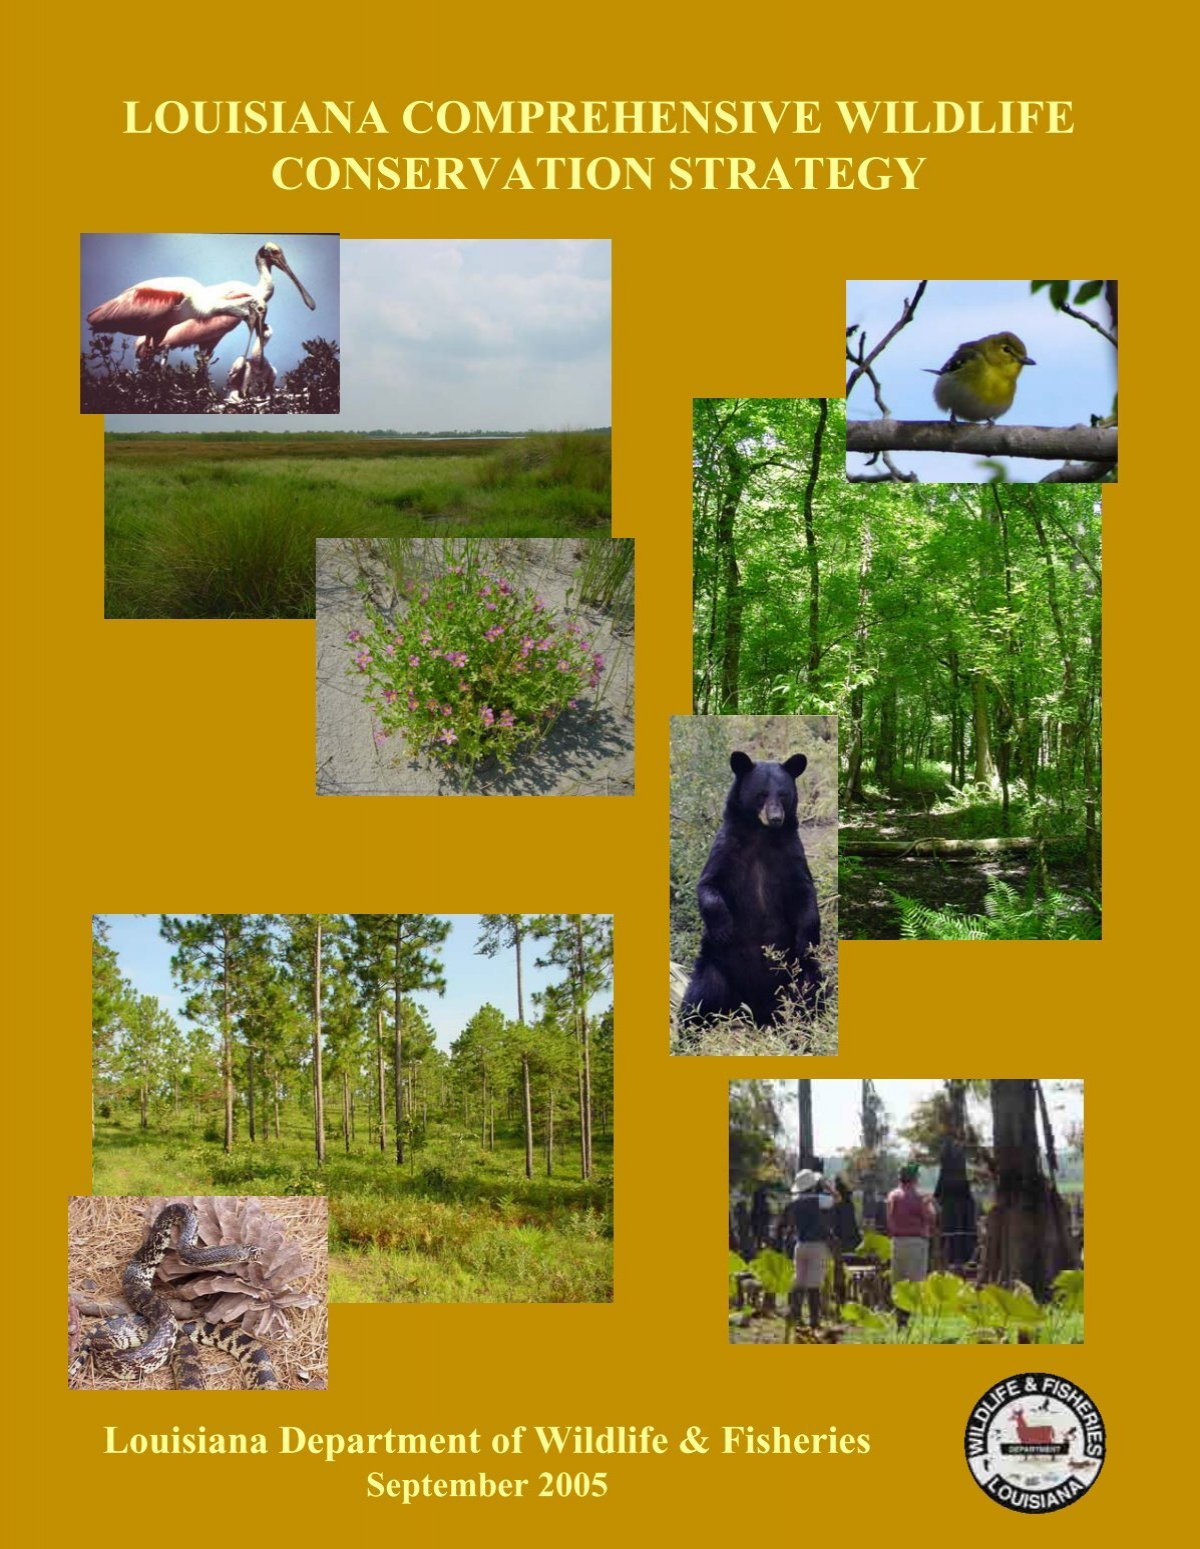 Wildlife Action Plan - Louisiana Department of Wildlife and Fisheries